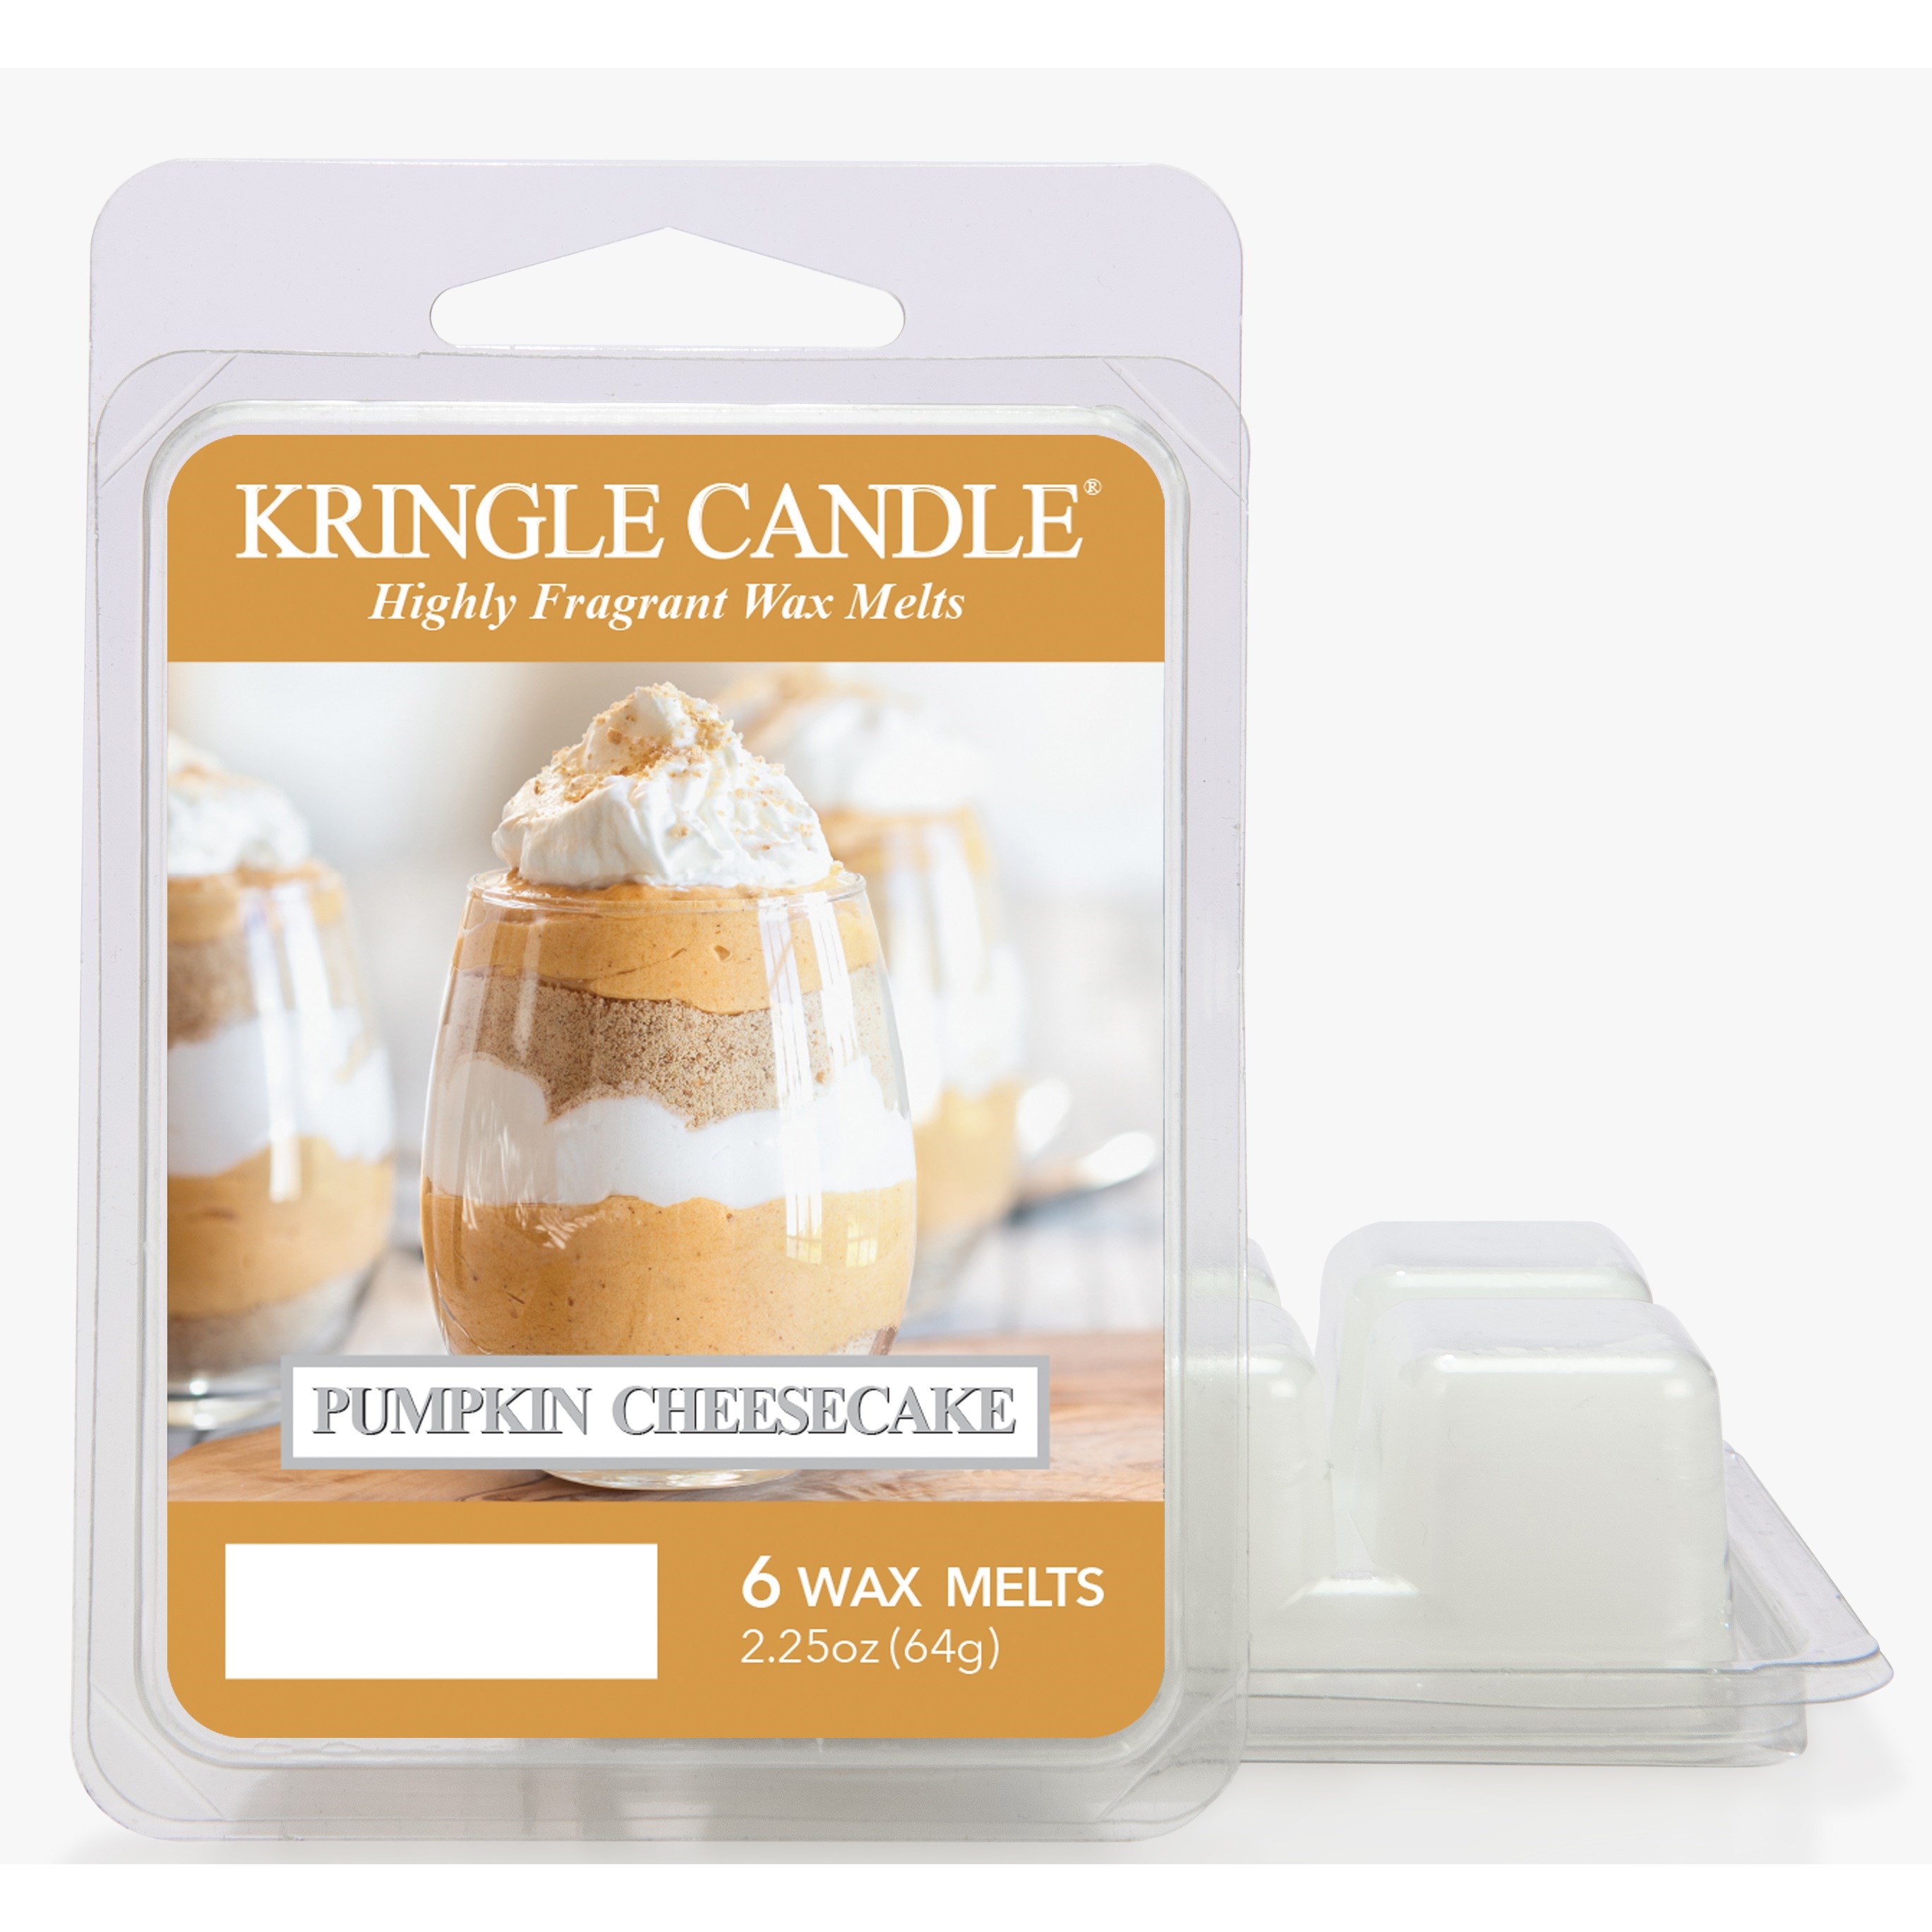 Kringle Candle Pumpkin Cheesecake Wax Melts